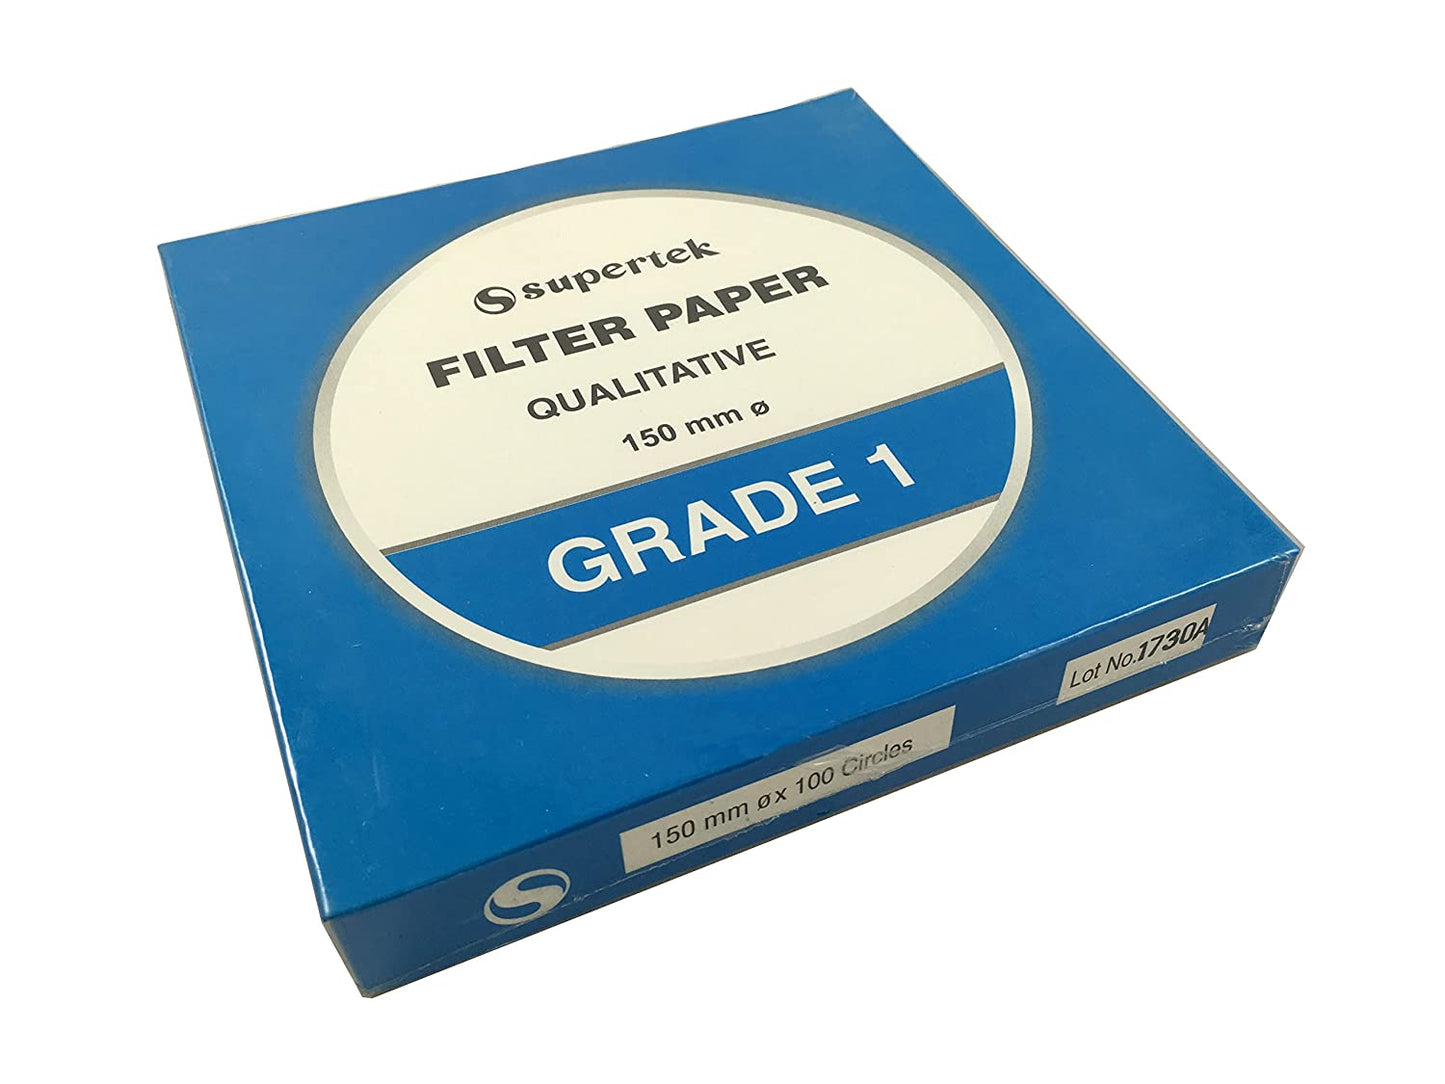 Filter Paper, Qualitative, Grade 1, 150 mm (Diameter) Pack of 100 Sheets